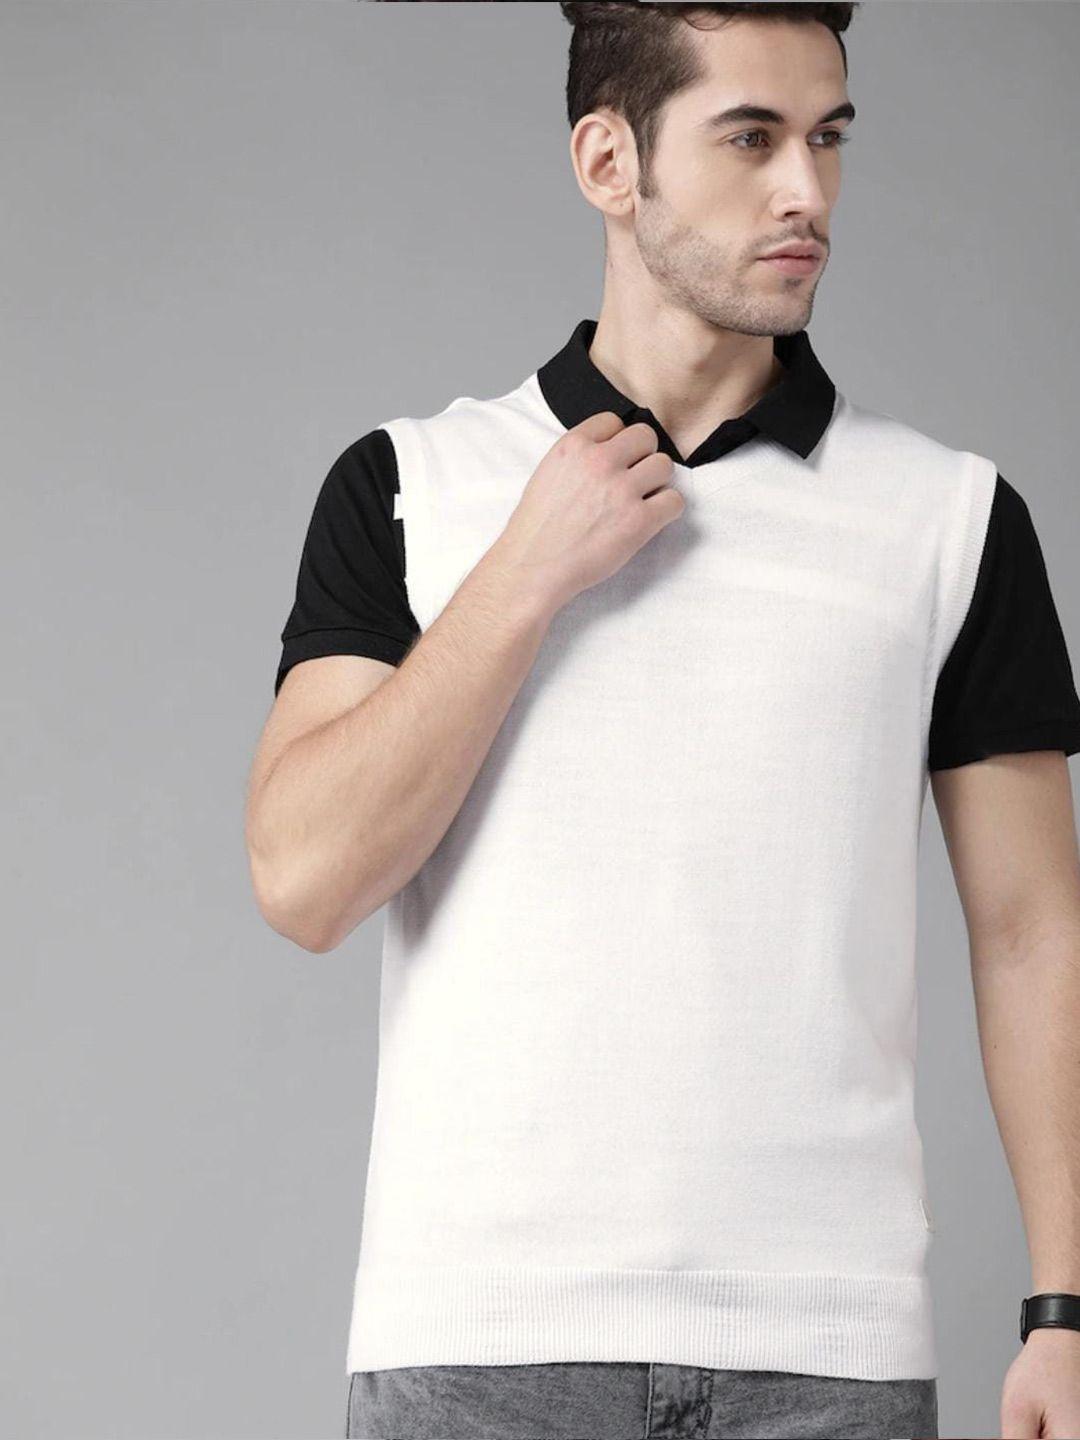 the-roadster-lifestyle-co.-white-sleeveless-acrylic-sweater-vest